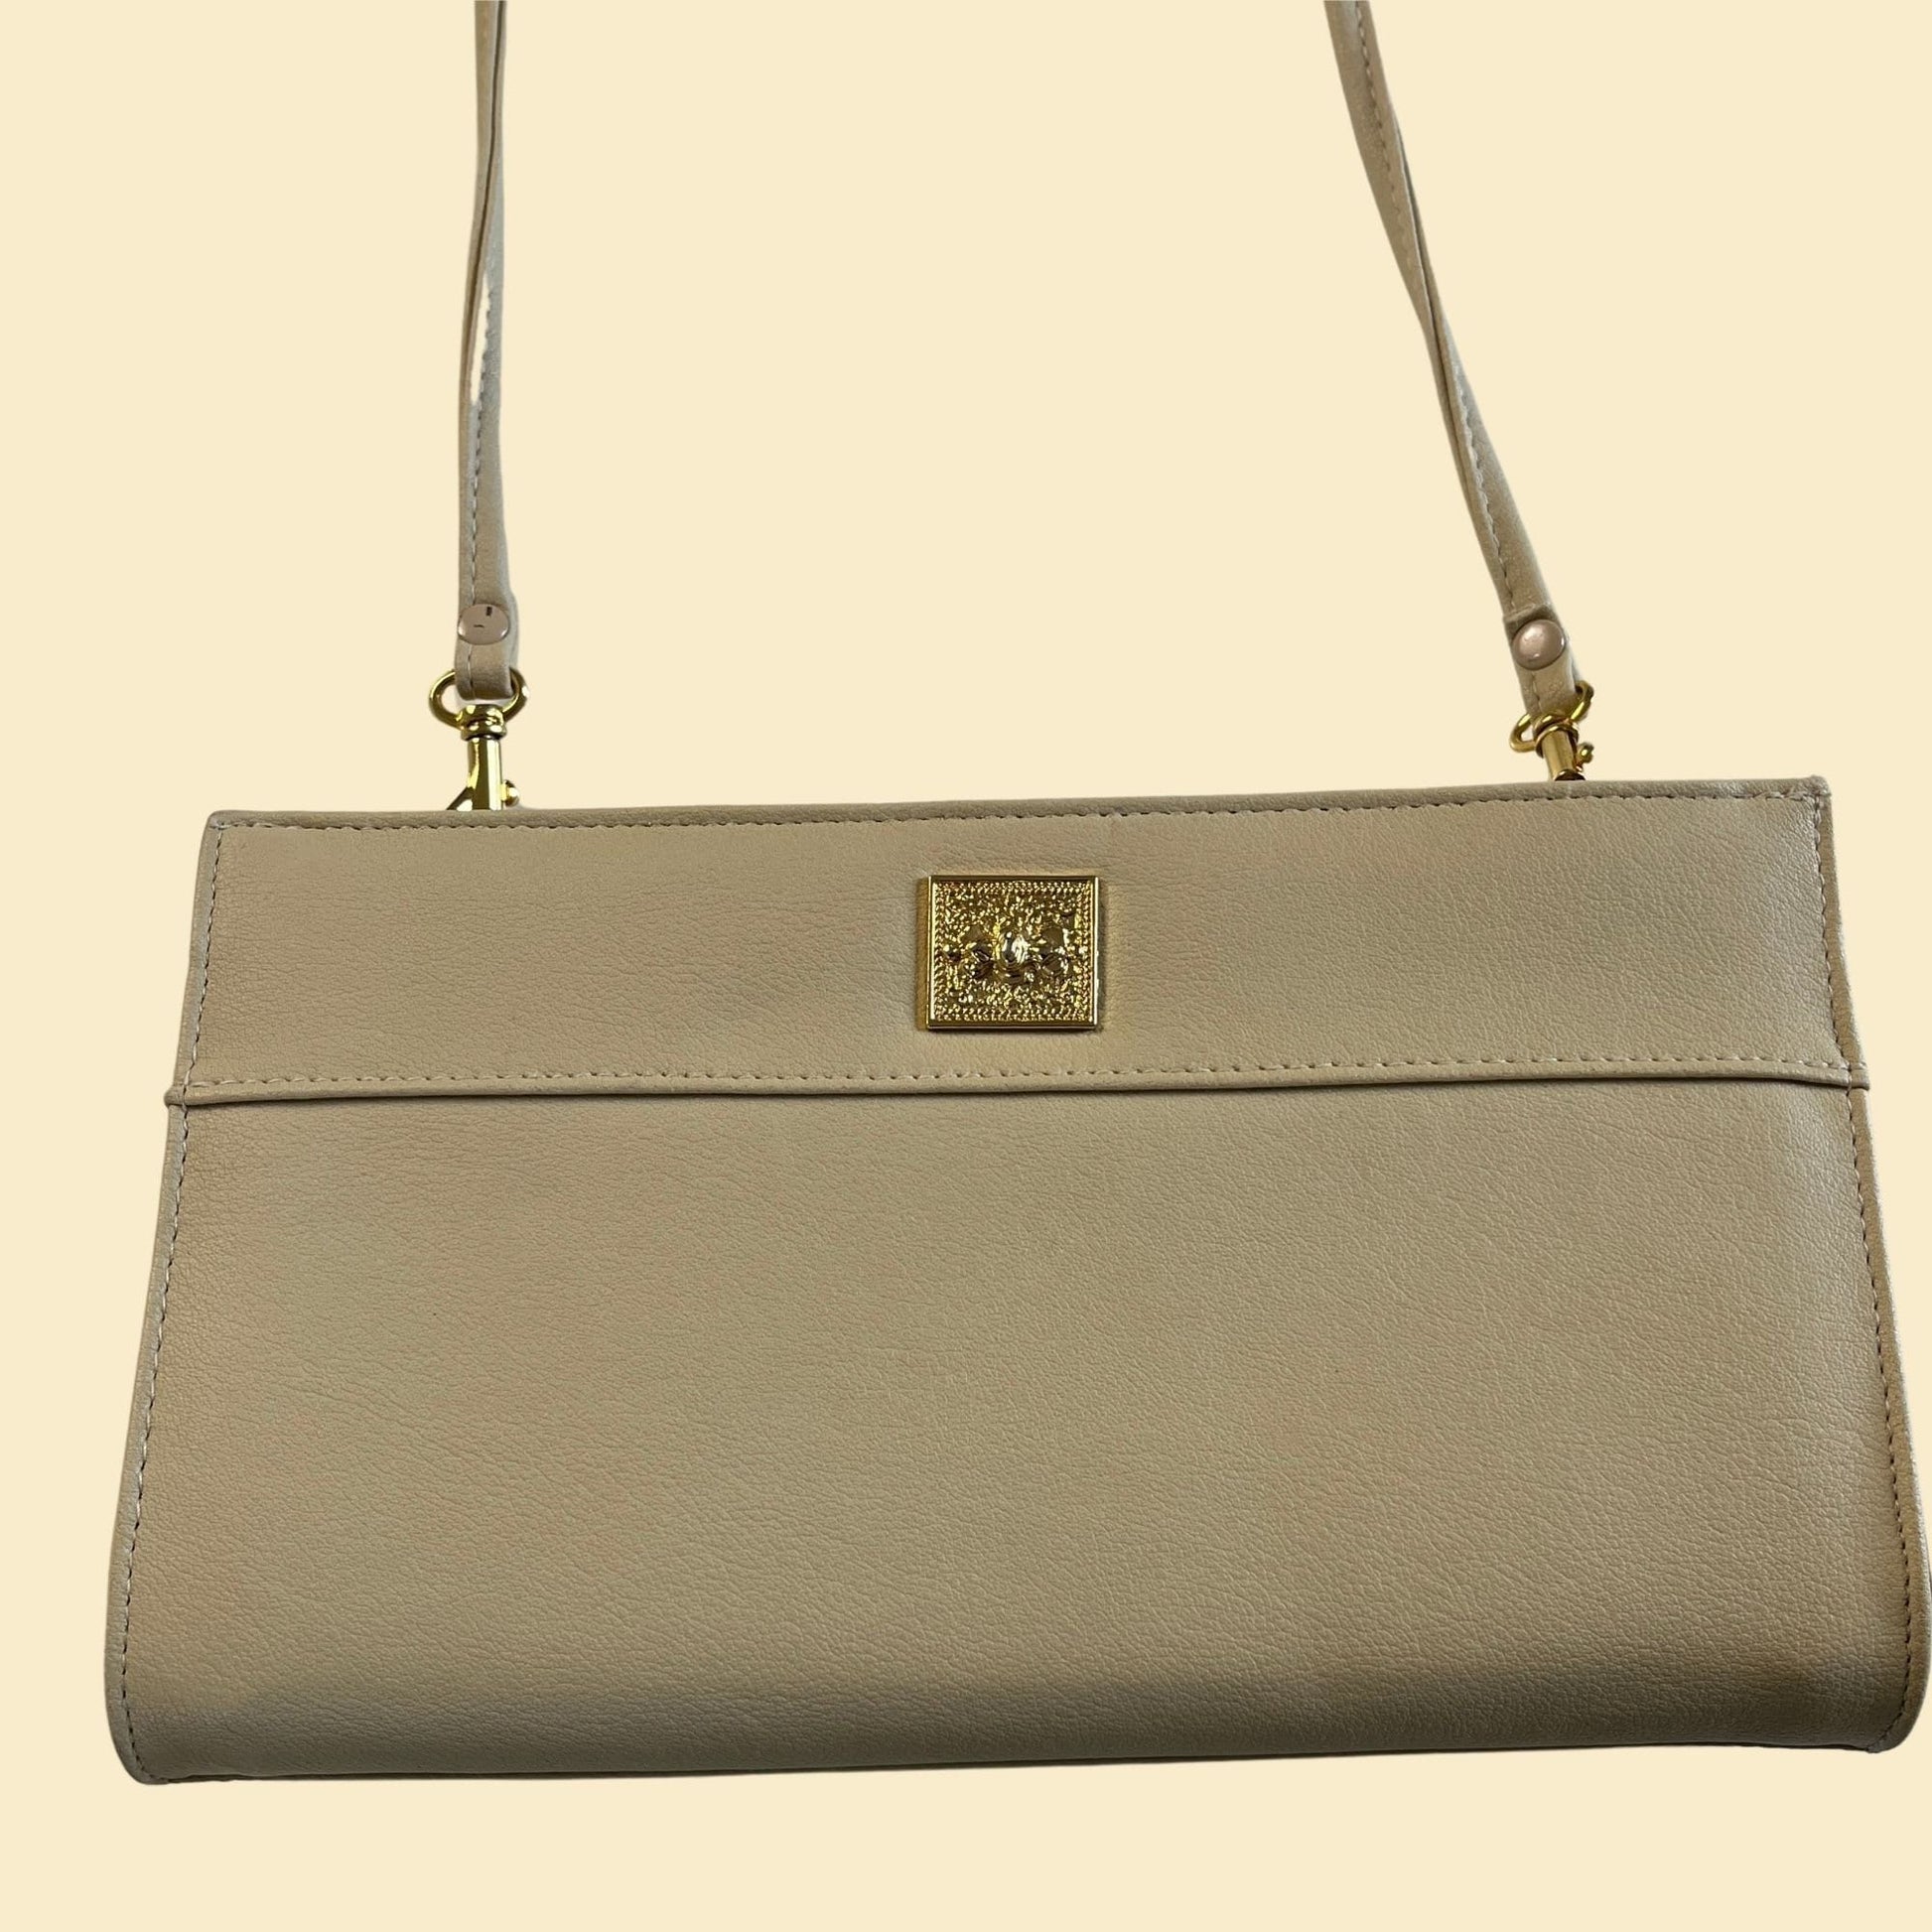 90s cream faux leather purse, vintage 1990s rectangular beige shoulder bag with gold colored hardware/emblem